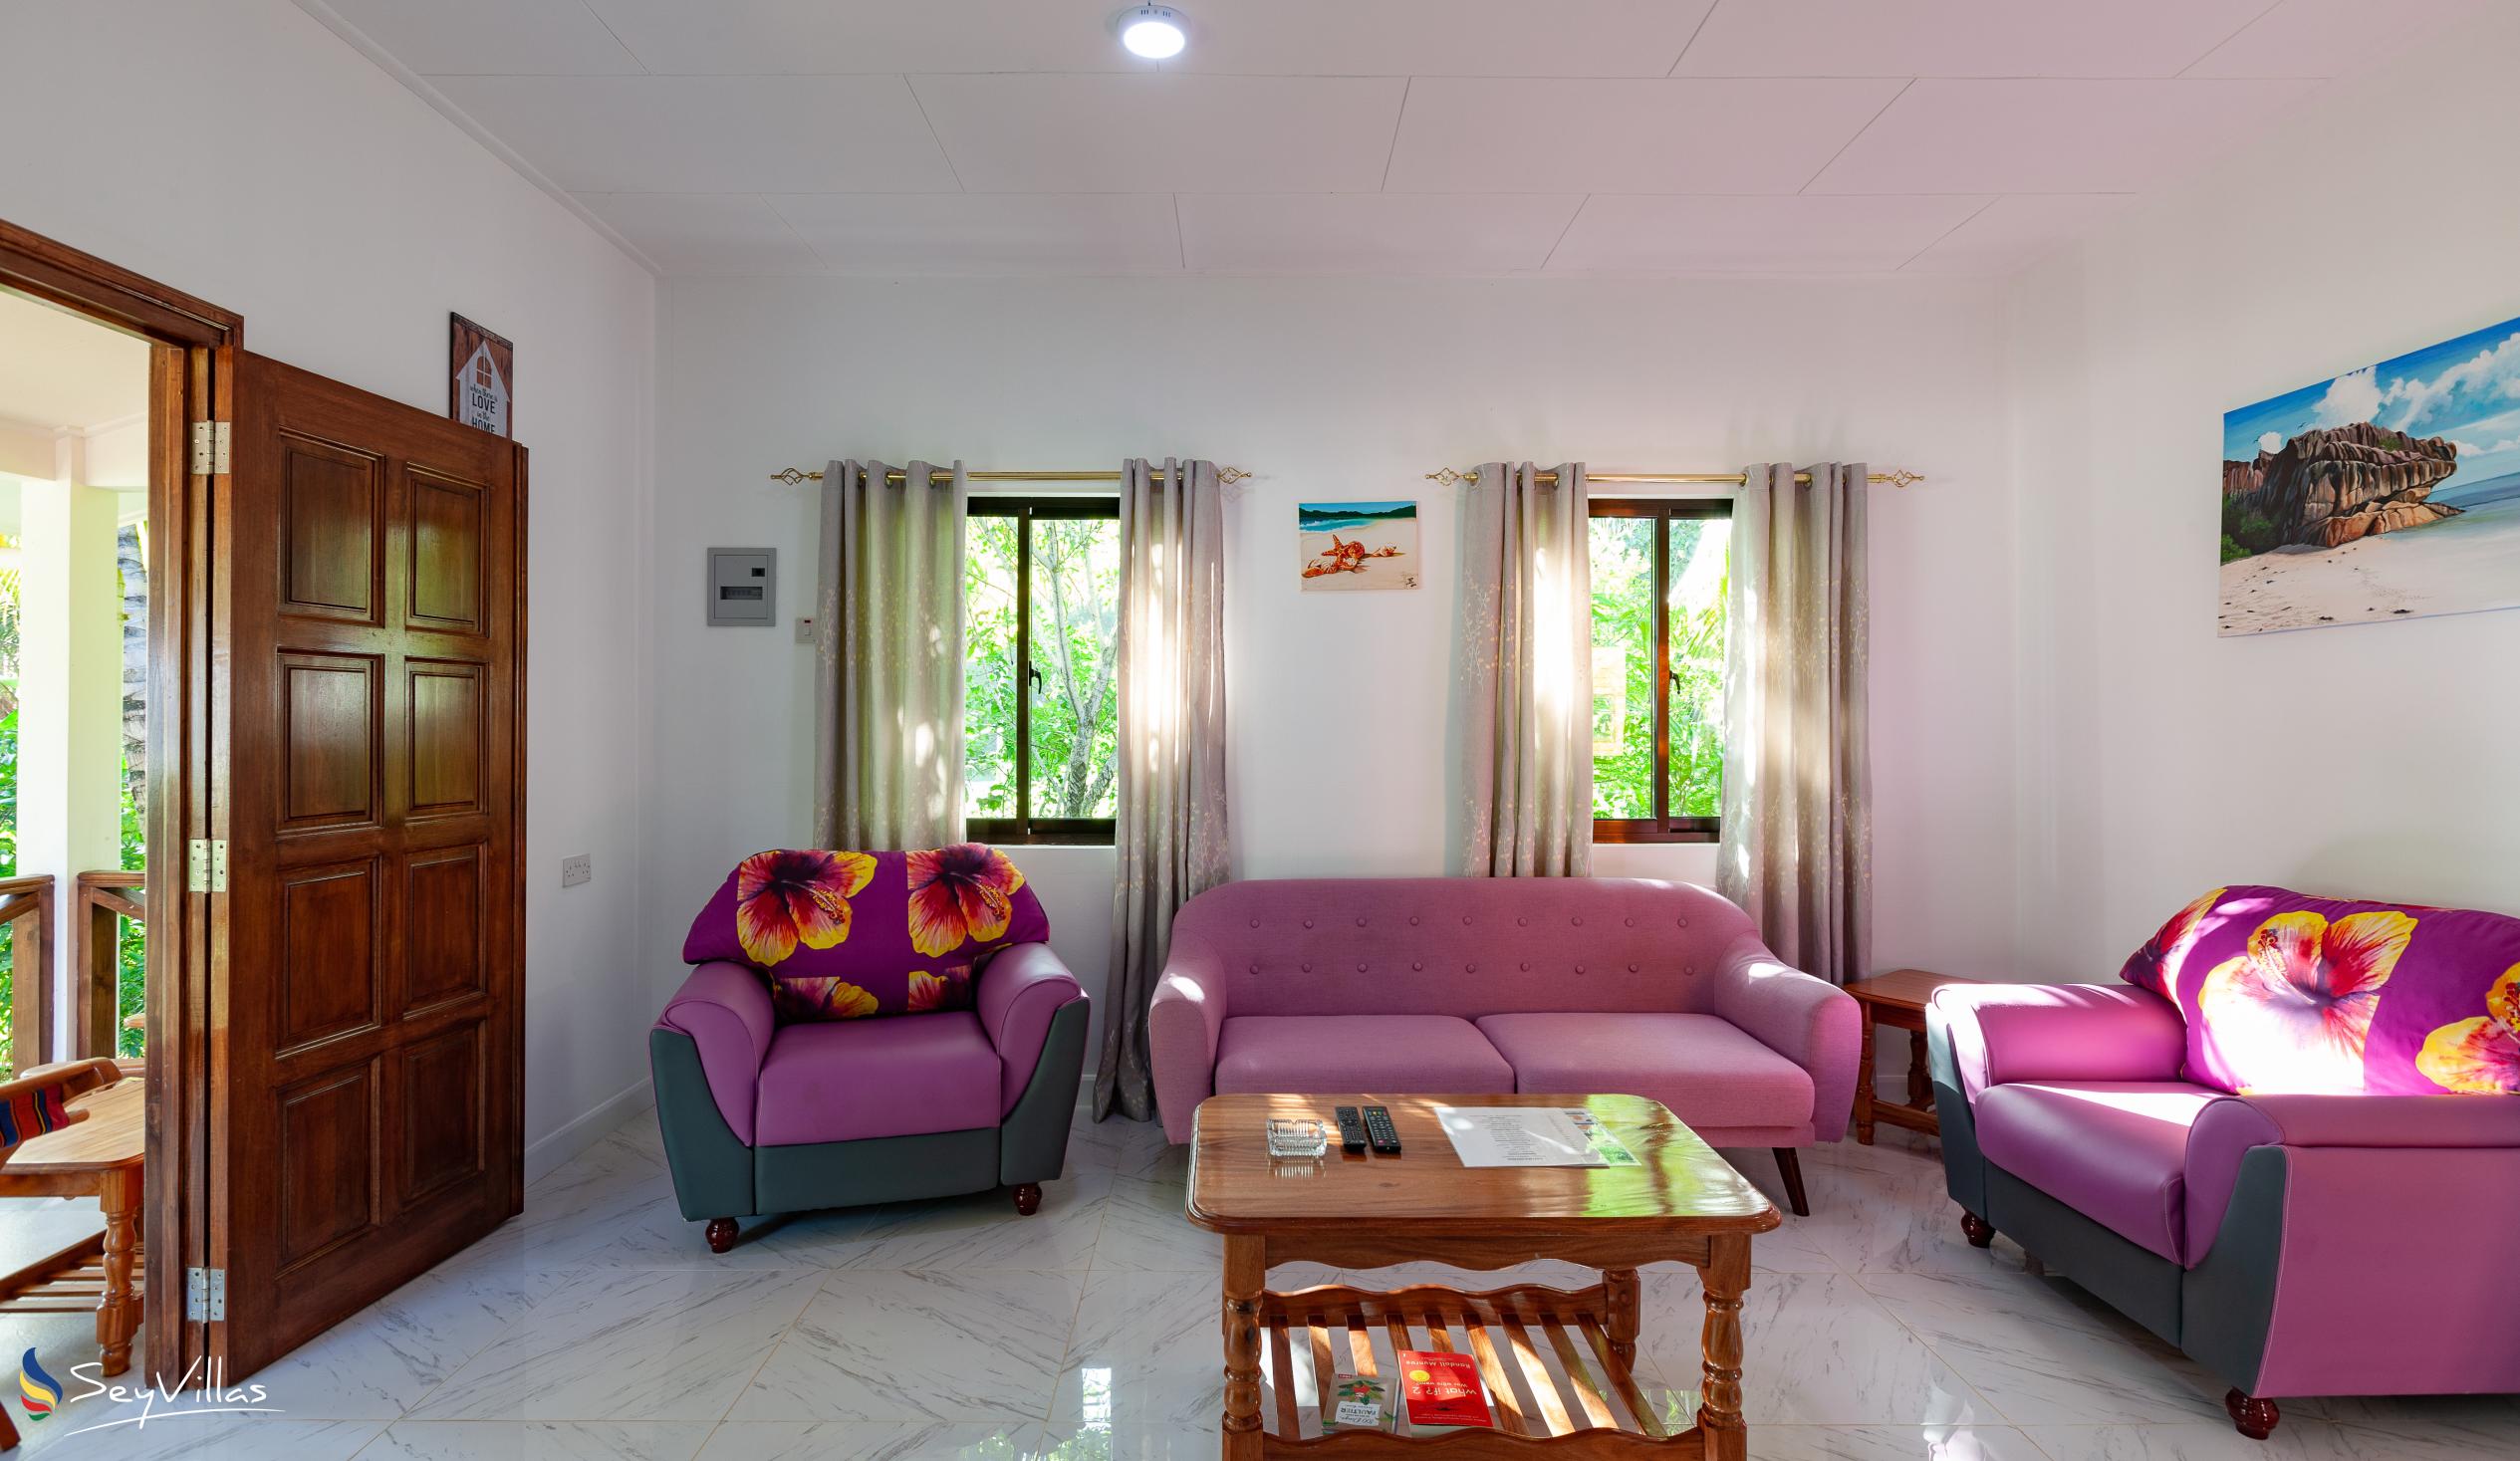 Photo 65: Anse Grosse Roche Beach Villa - 1-Bedroom Apartment - La Digue (Seychelles)